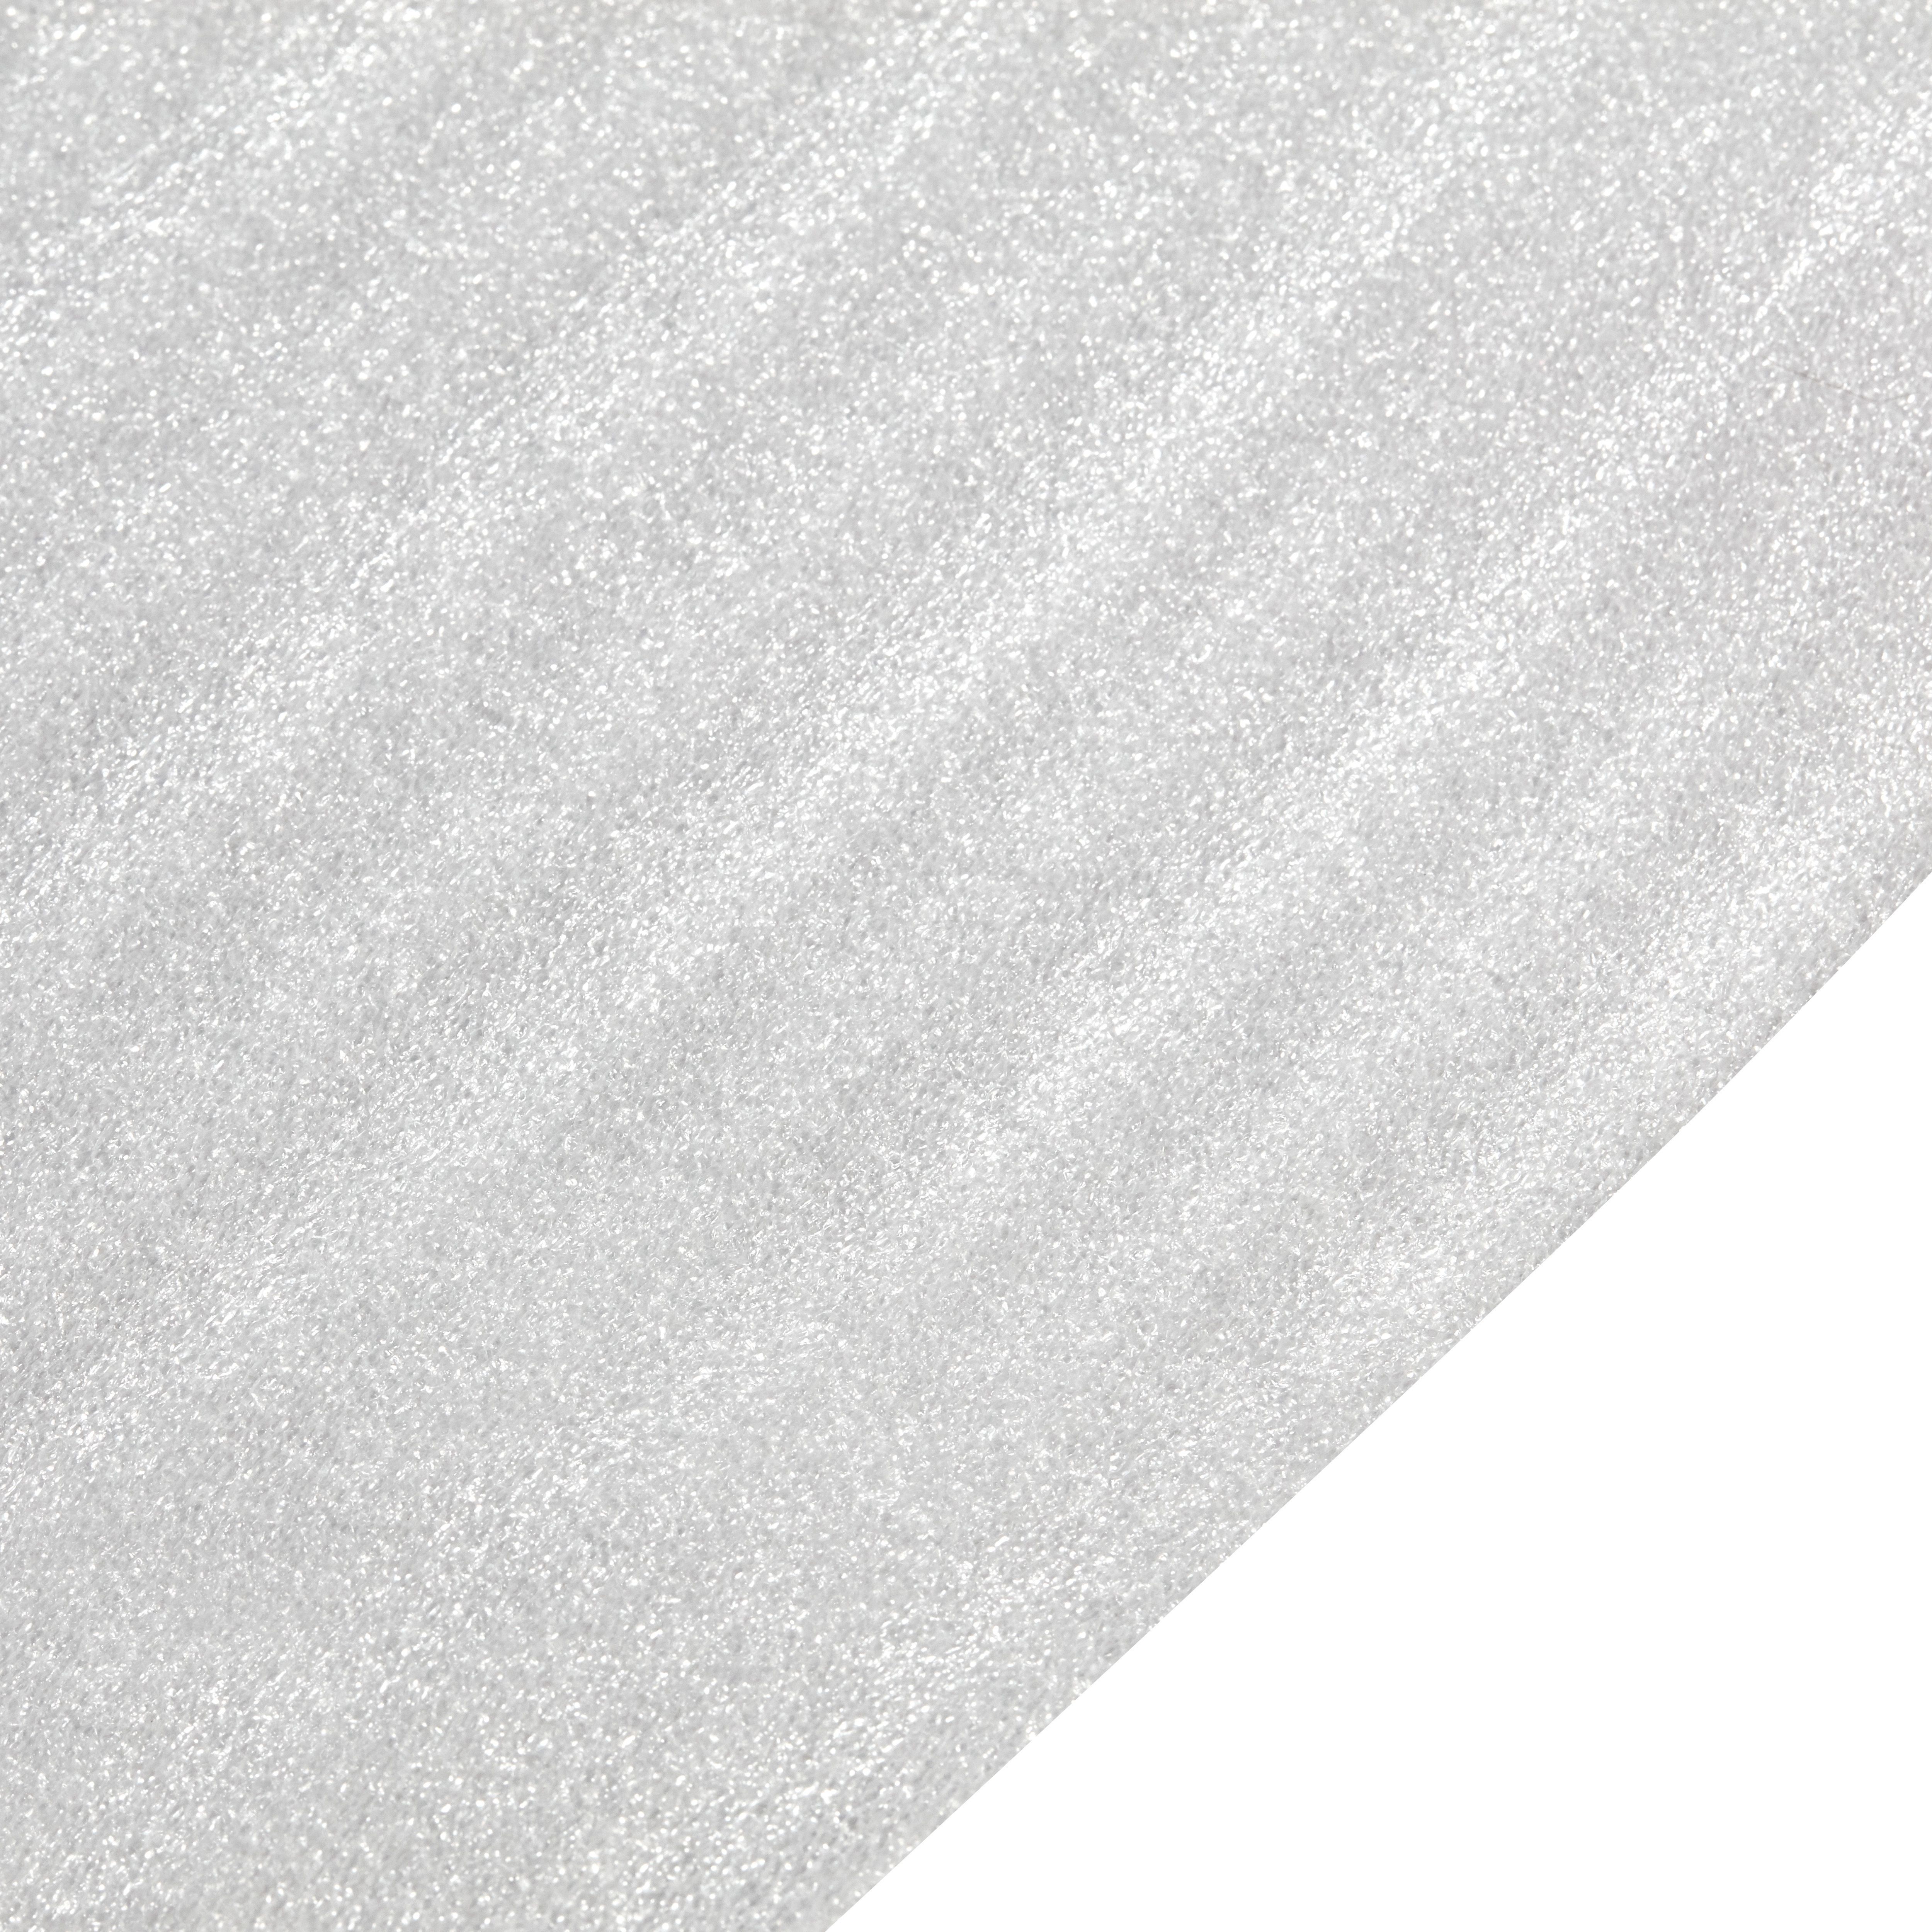 2mm Polyethylene foam Laminate & wood Underlay roll, 20m²